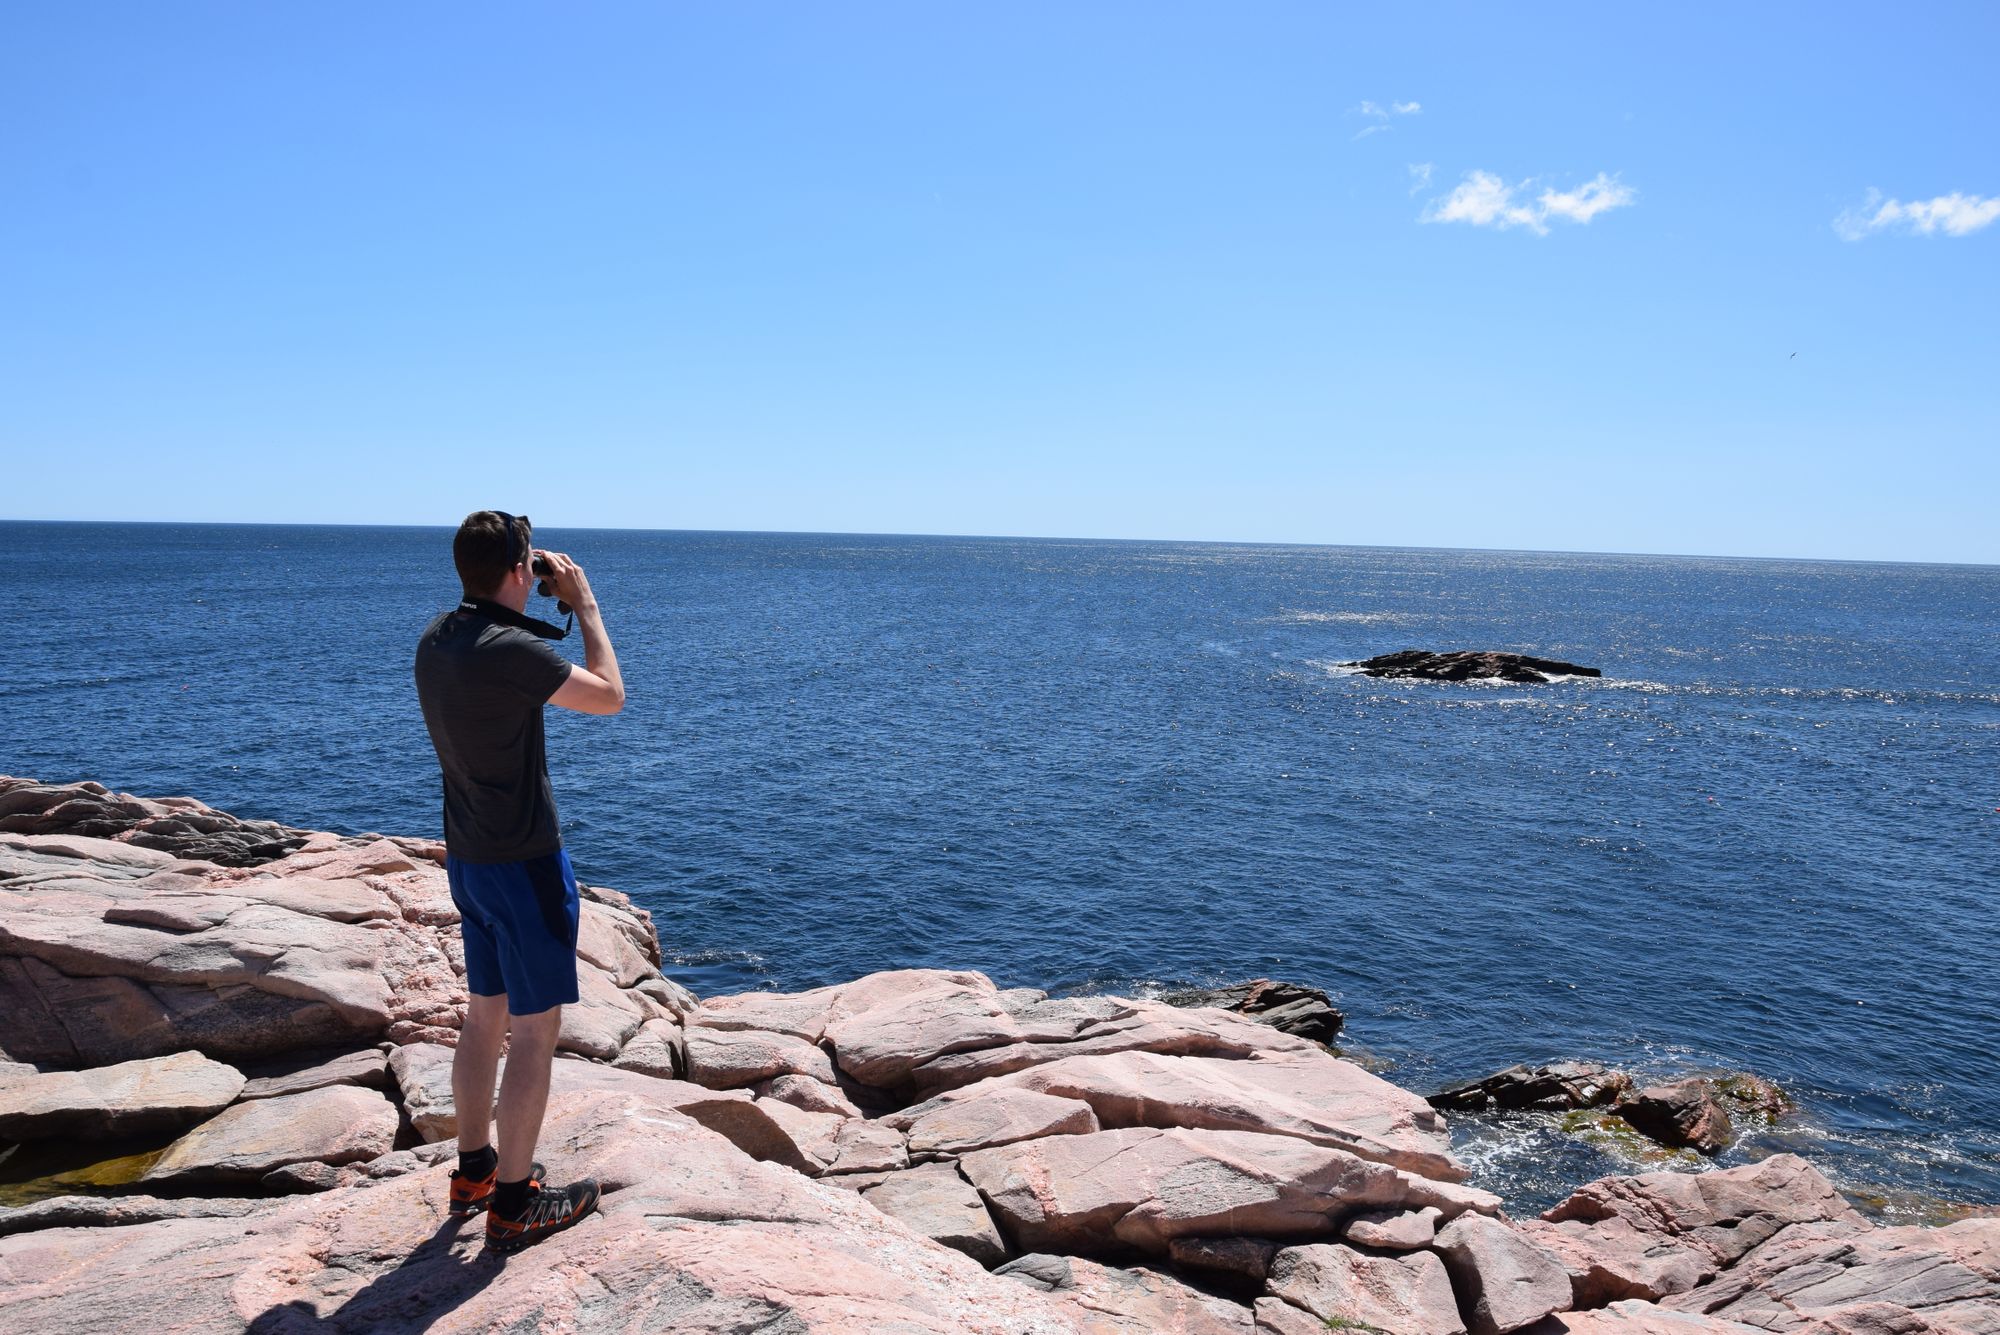 Cape Breton Island, Nova Scotia